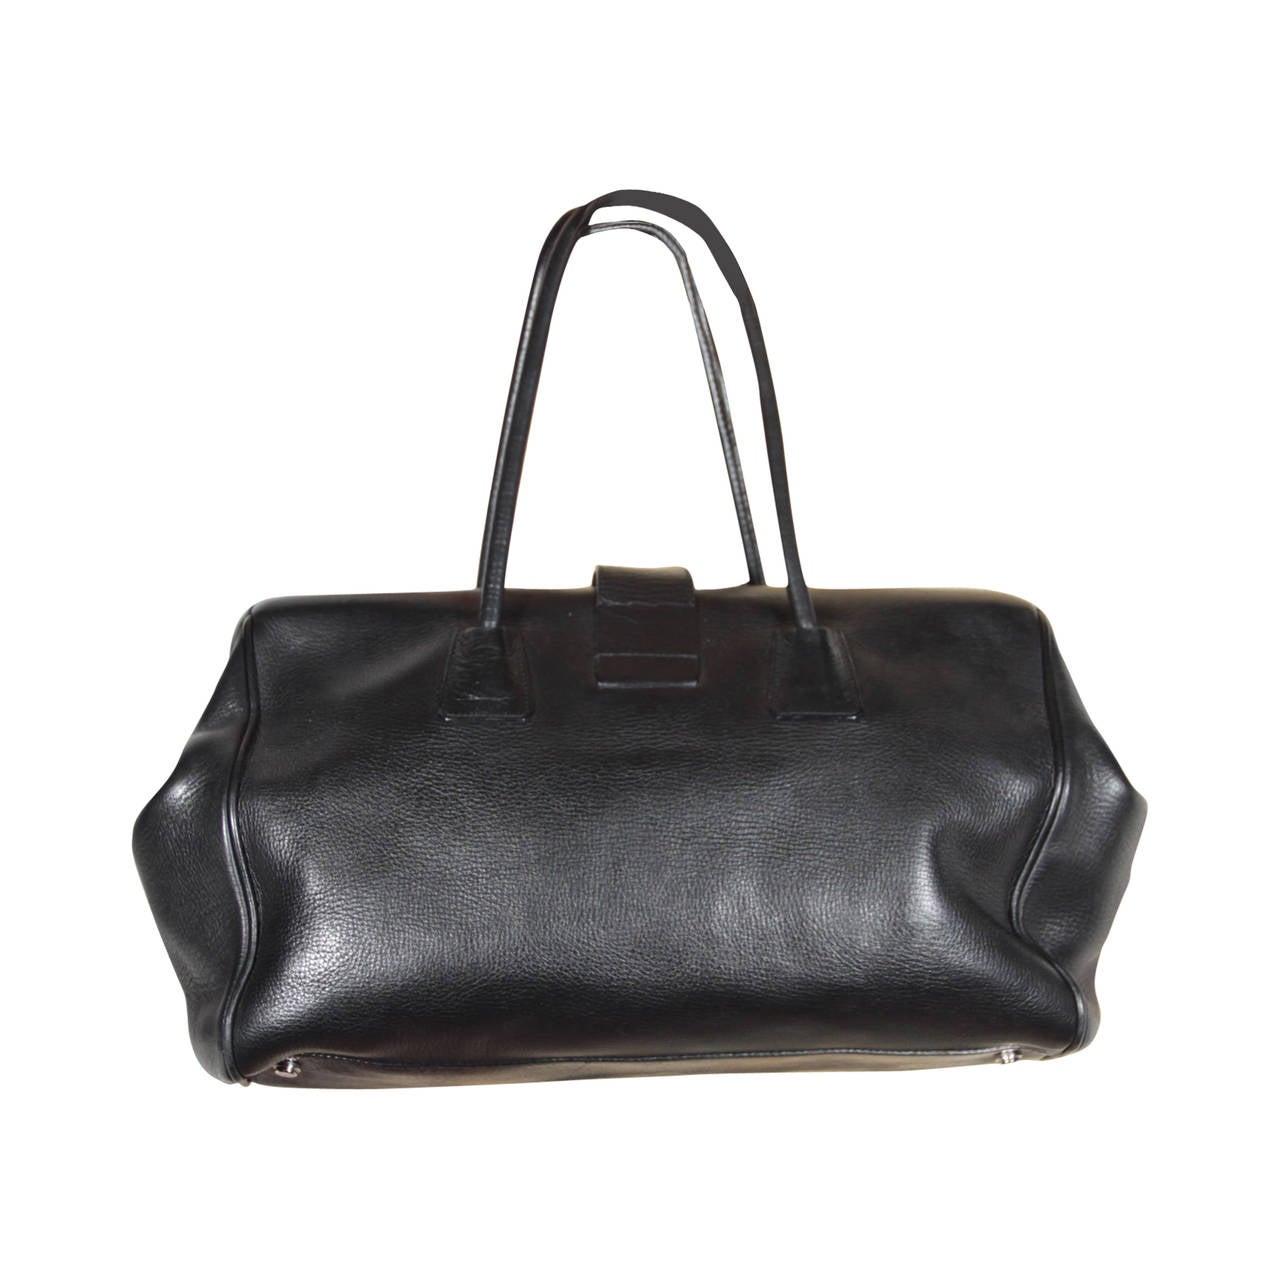 PRADA Authentic Italian Black Leather DOCTOR BAG Handbag SATCHEL Tote at 1stdibs